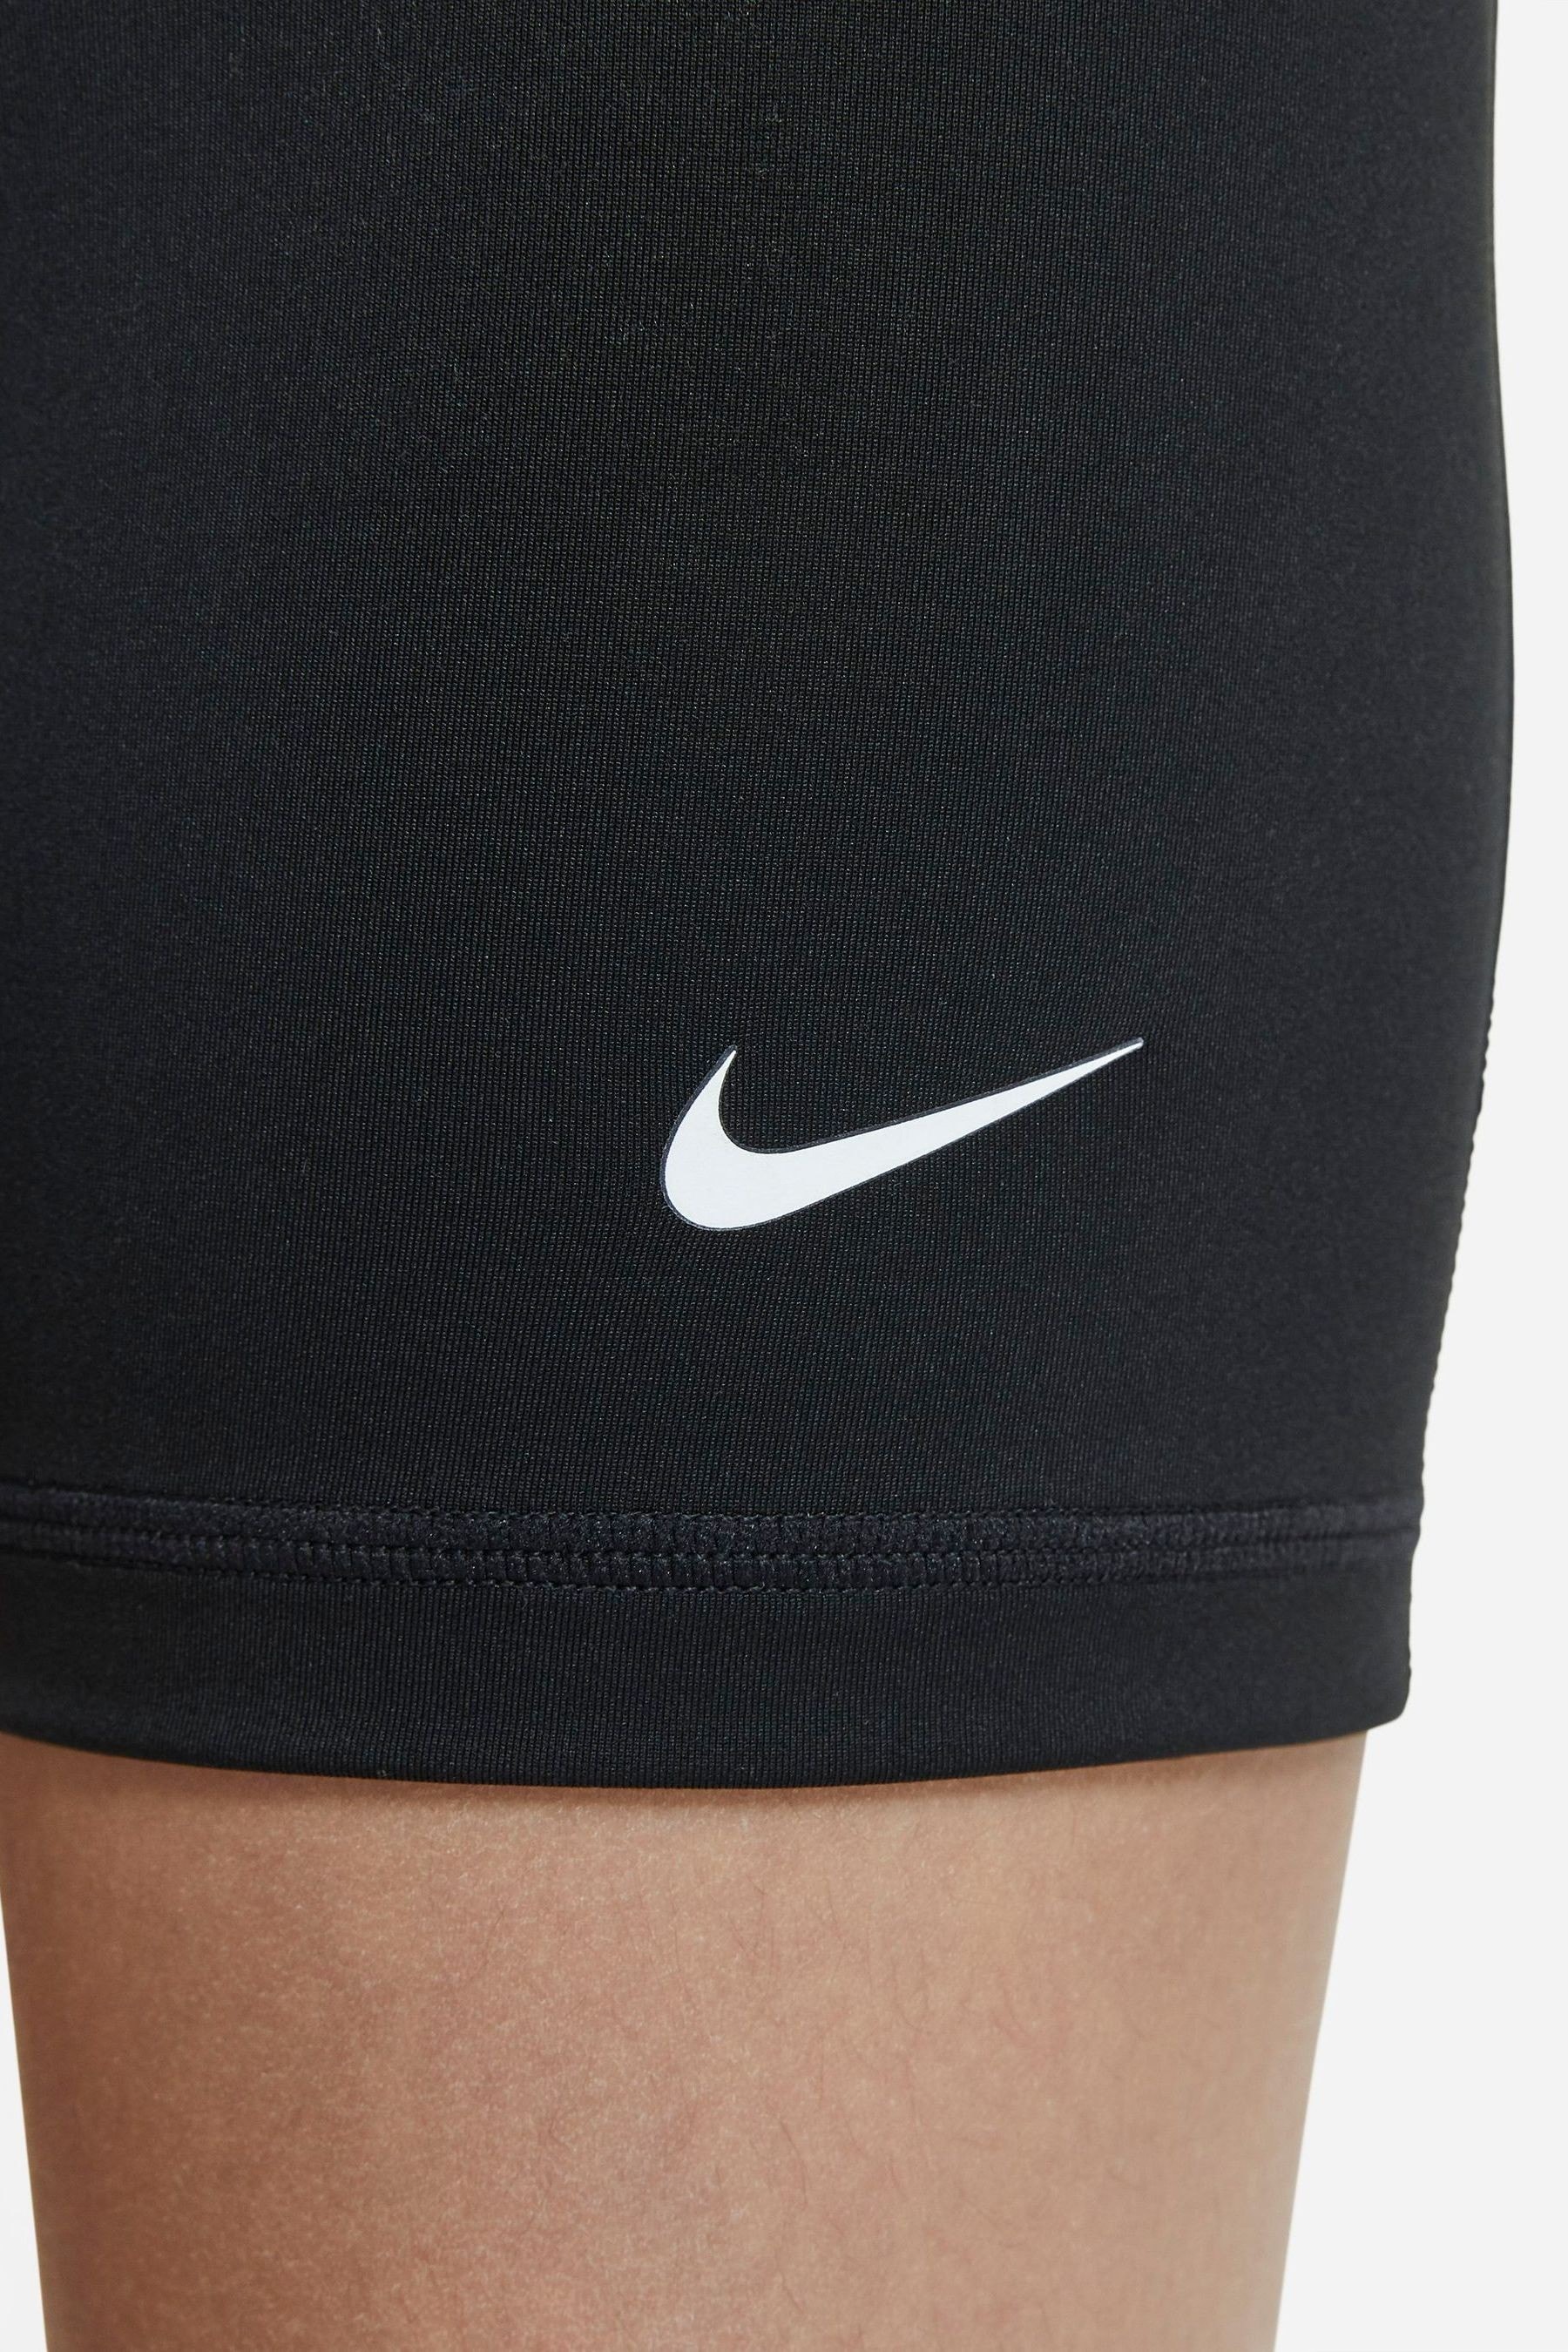 Buy Nike Performance Black Pro Shorts from the Next UK online shop